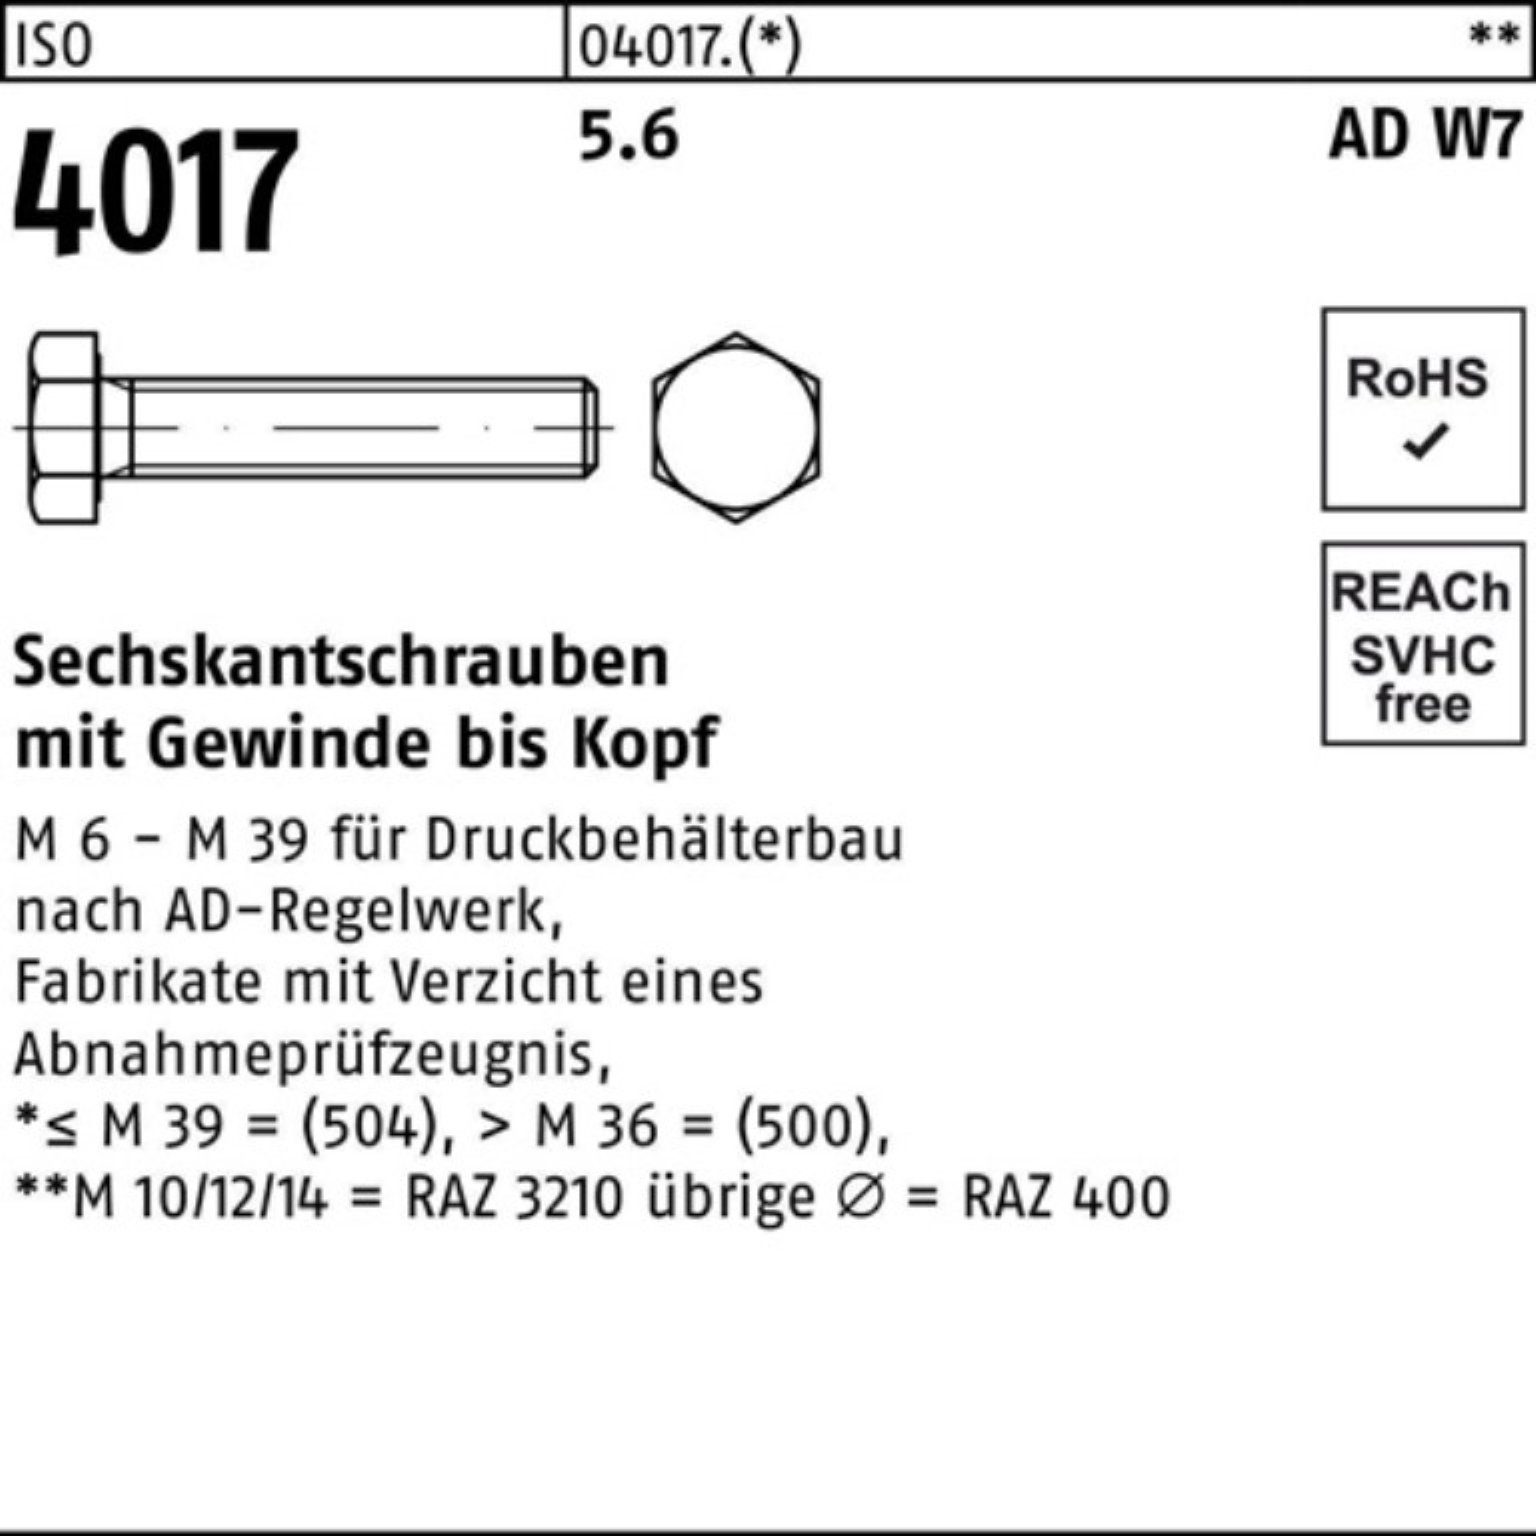 Bufab Sechskantschraube 100er Pack Sechskantschraube ISO 4017 VG M27x 100 5.6 AD W7 1 Stück I